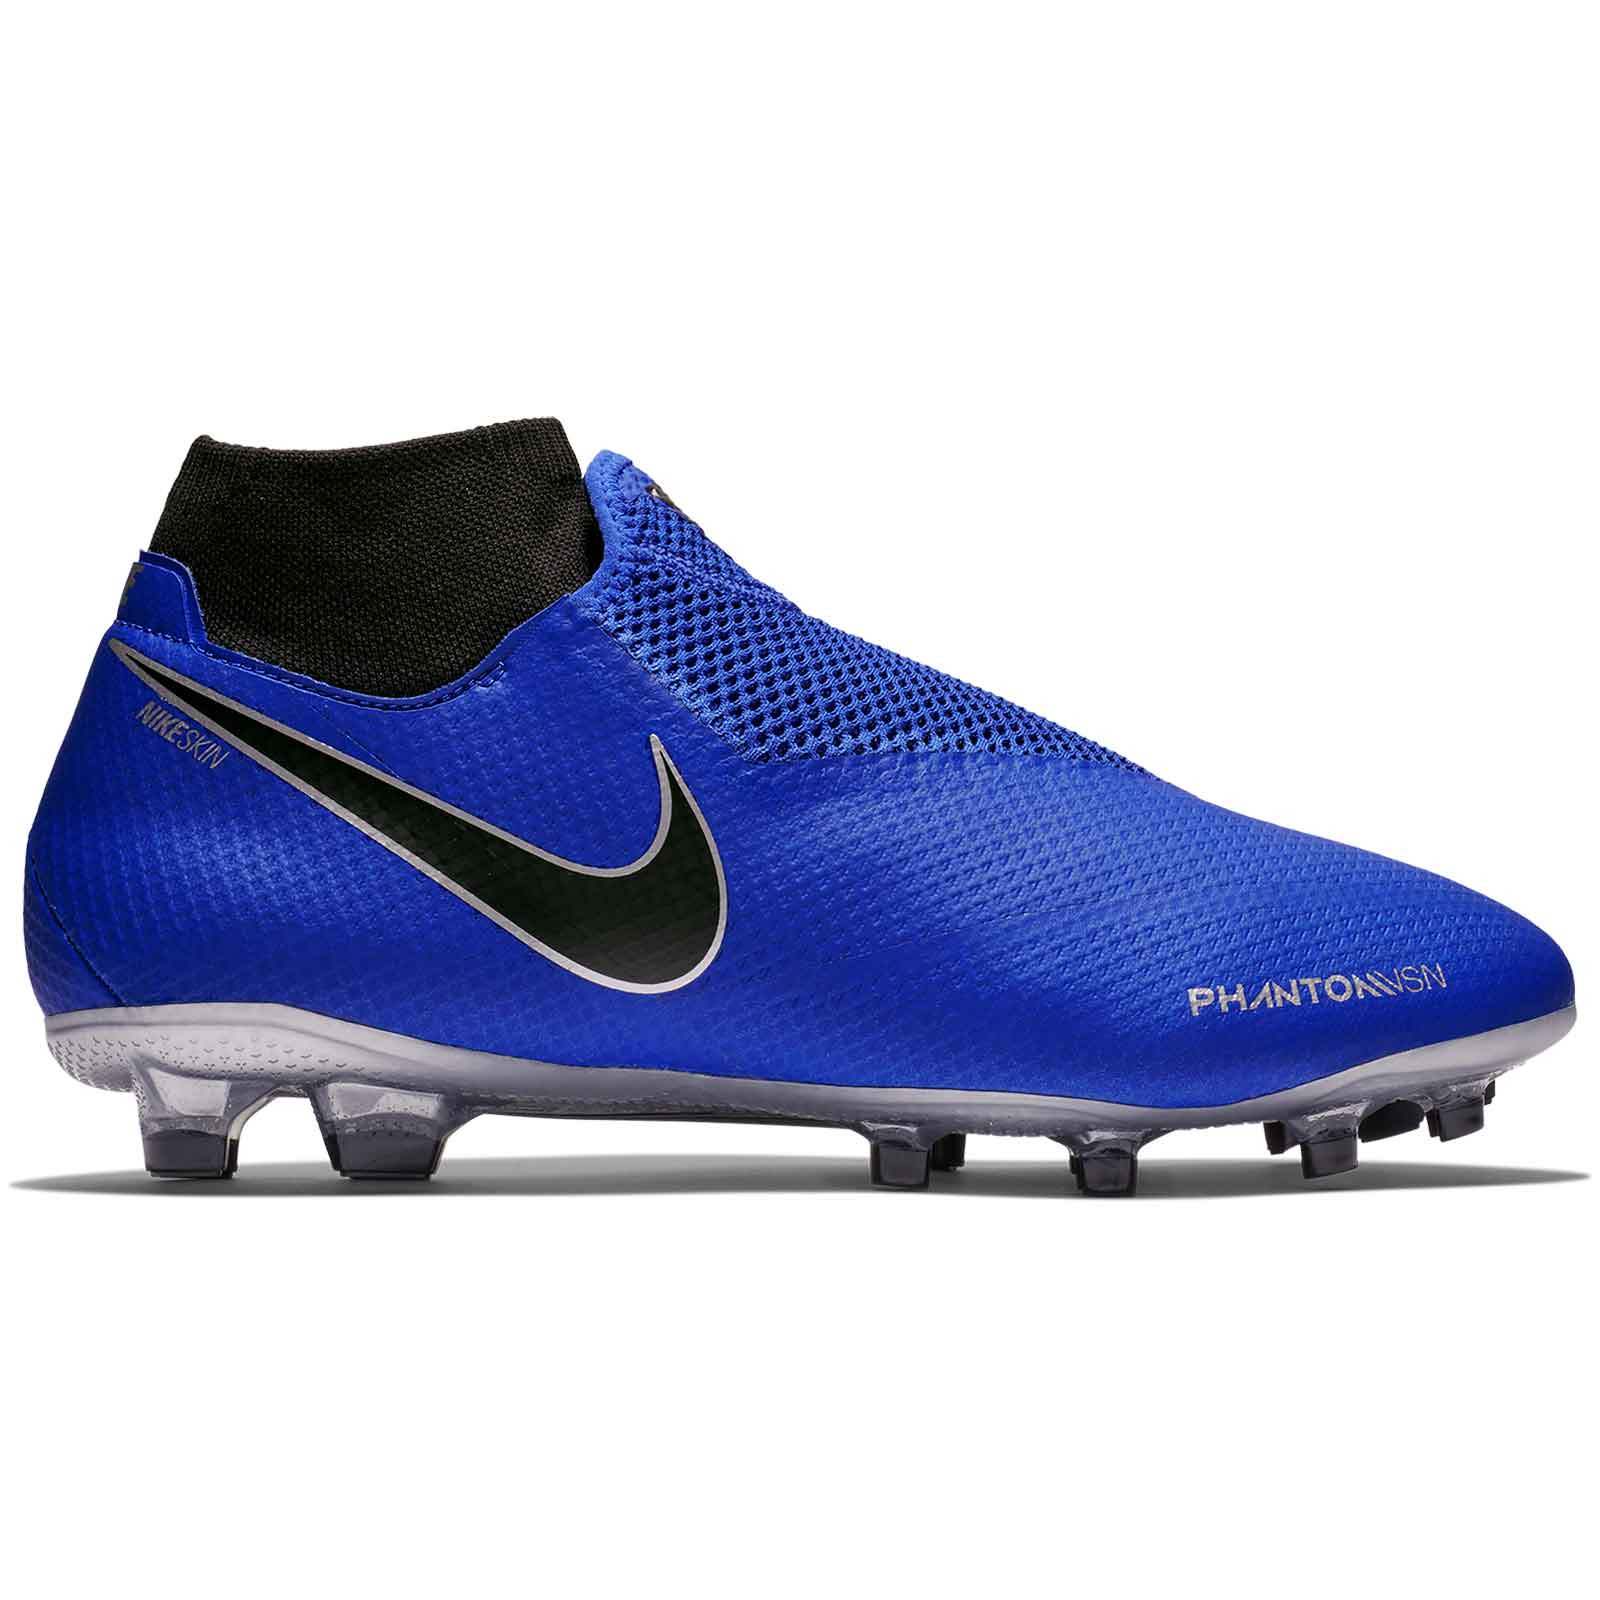 Género nivel Corresponsal Nike Phantom Vision Pro DF FG azules |futbolmania